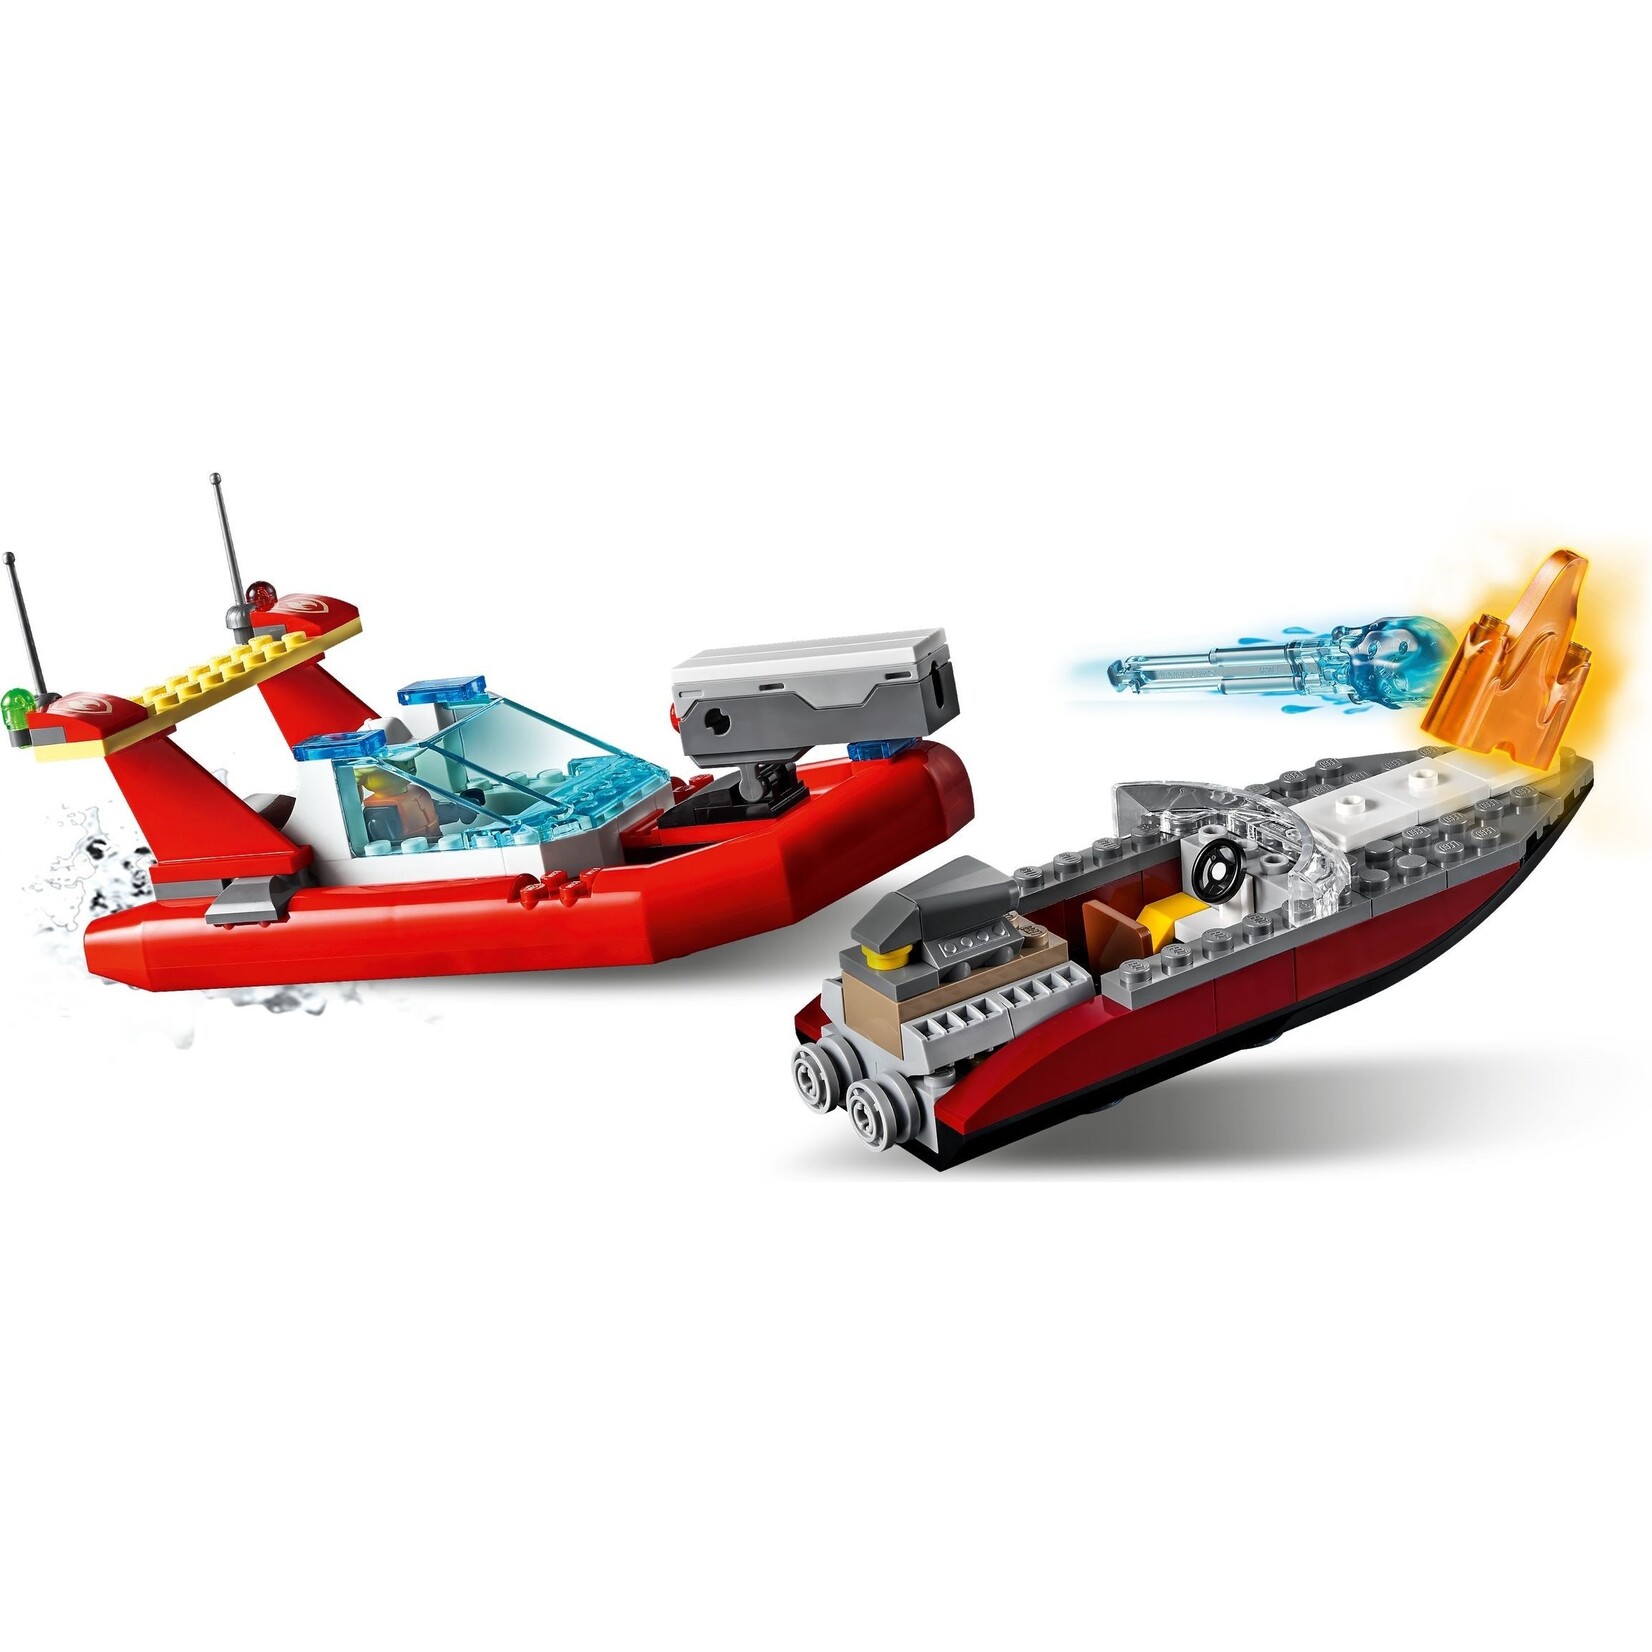 LEGO Kustpolitie en brandmissie - 60308